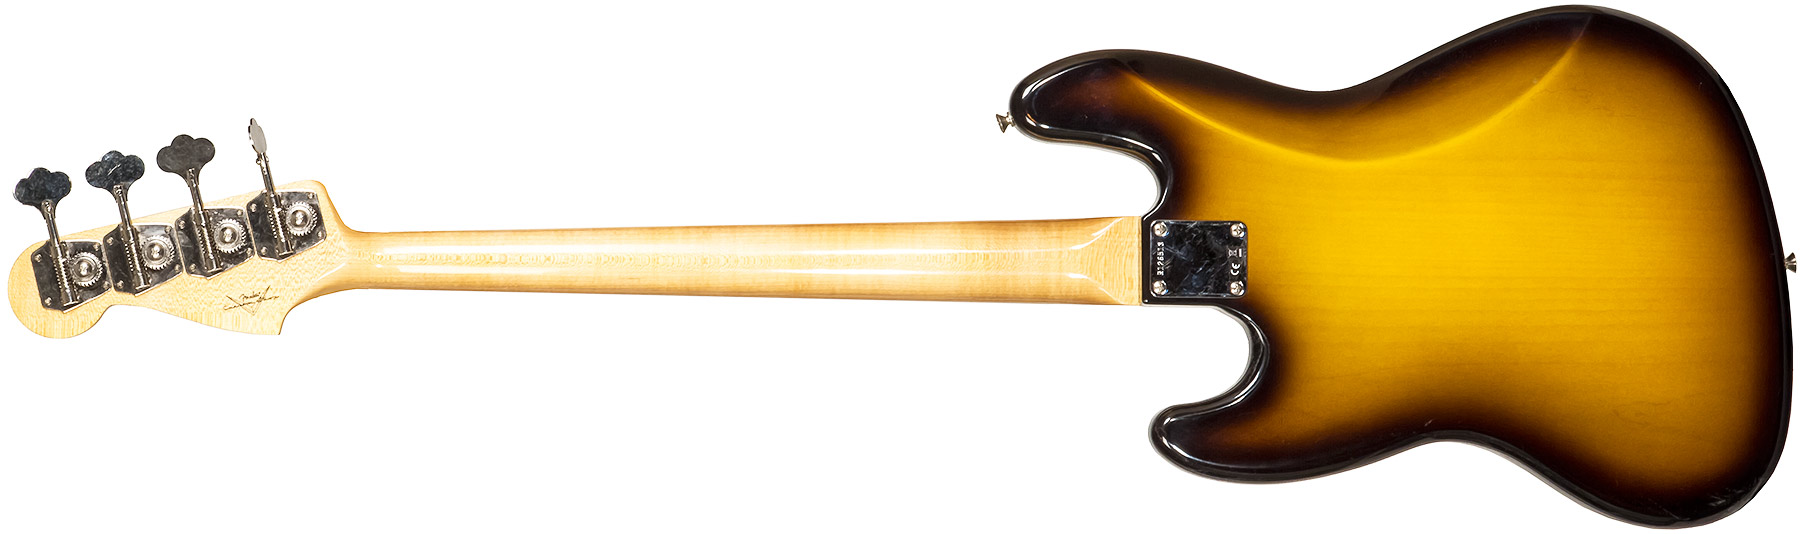 Fender Custom Shop Jazz Bass 1964 Rw #r126513 - Closet Classic 2-color Sunburst - Solid body elektrische bas - Variation 1